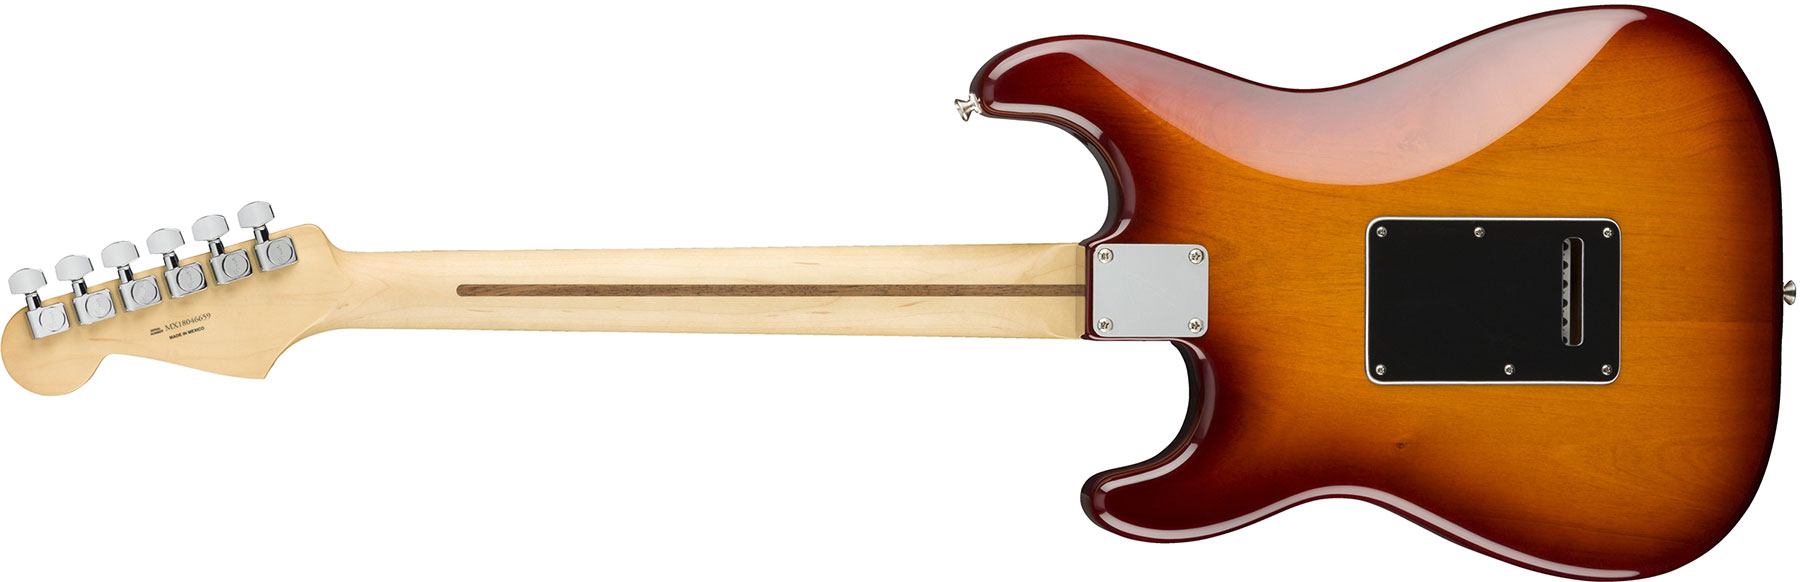 Fender Strat Player Mex Hsh Pf - Tobacco Burst - Str shape electric guitar - Variation 1